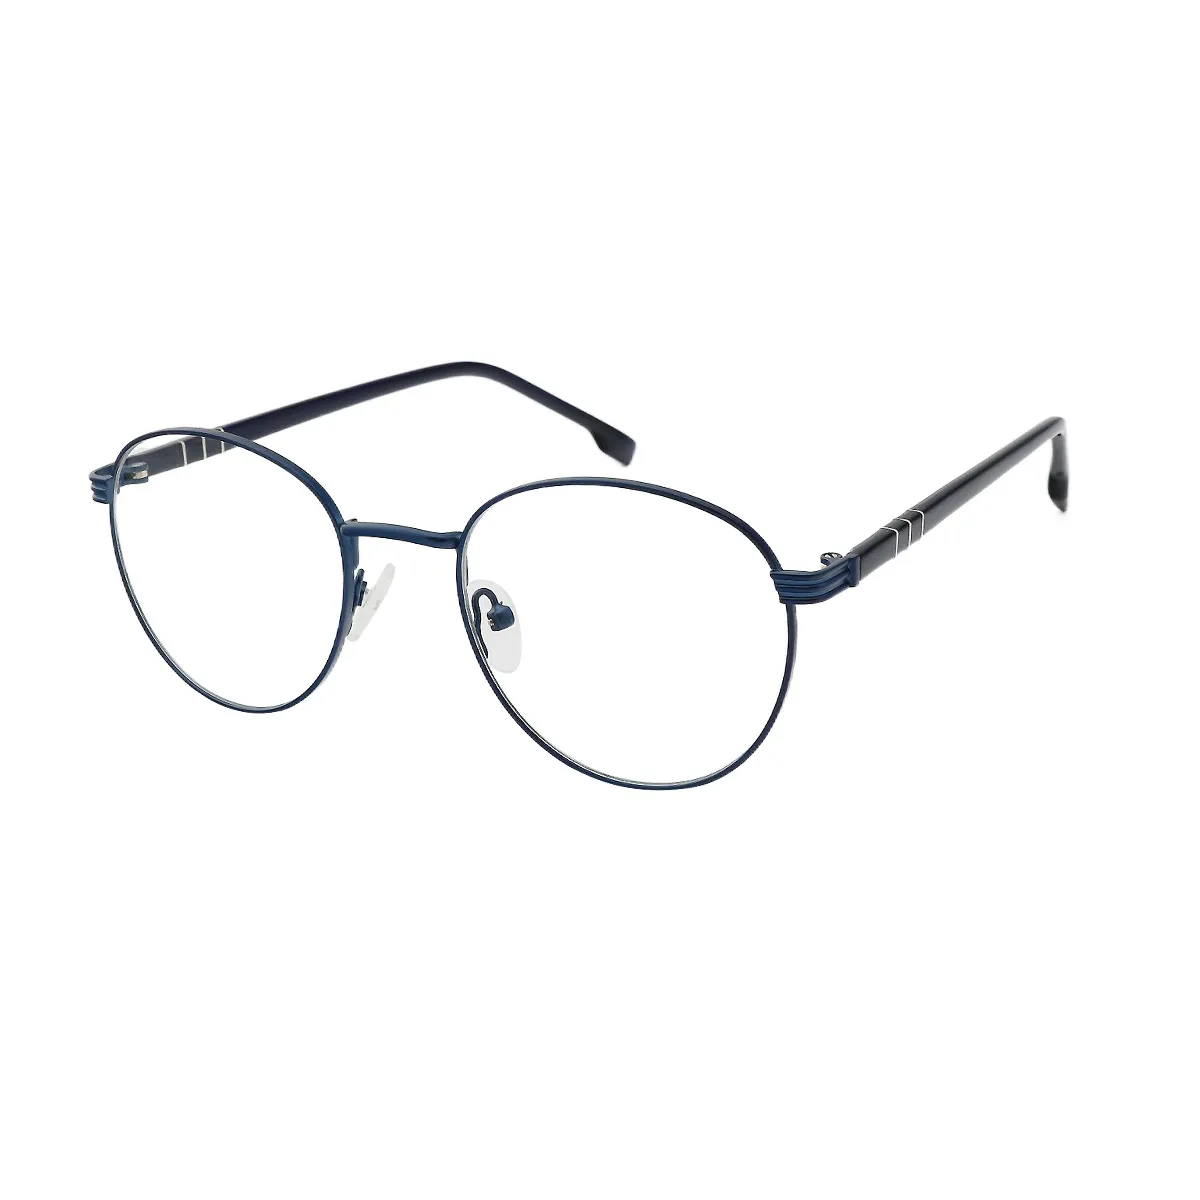 Florence - Round Blue Matte Glasses for Men & Women